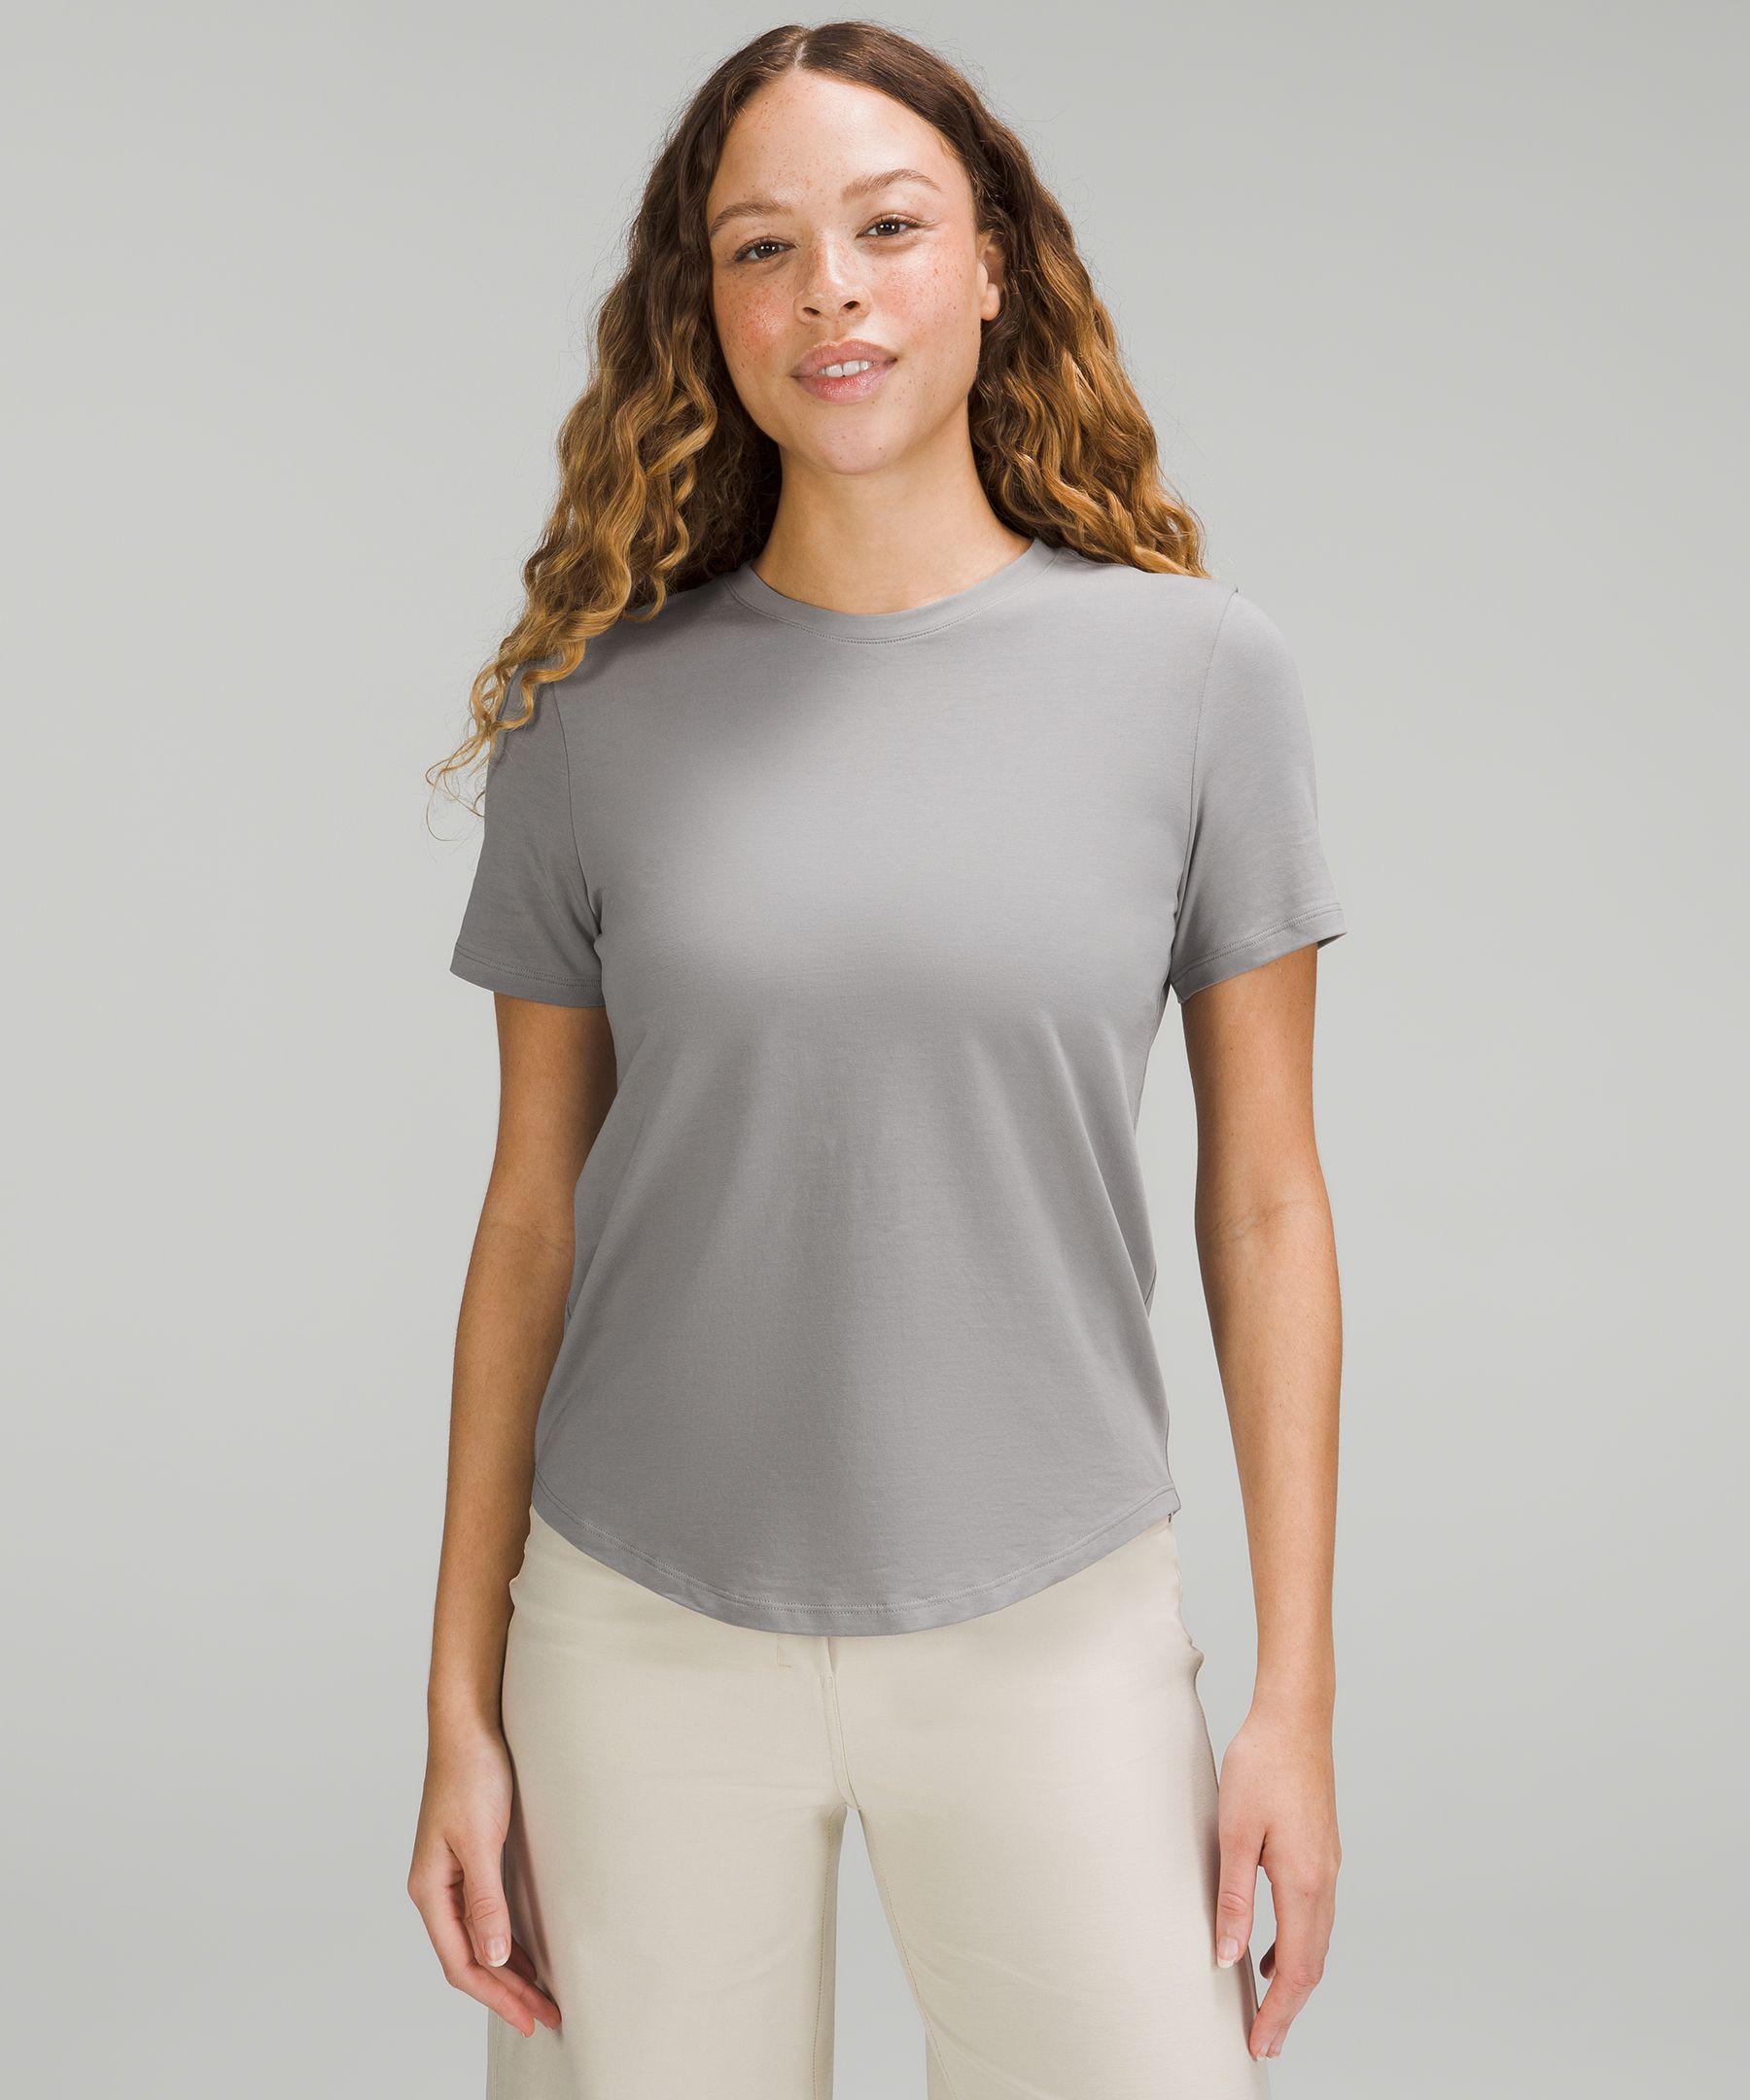 ADOME Womens Workout Top Running Yoga Shirt Summer Short Sleeve Casual Tunic 